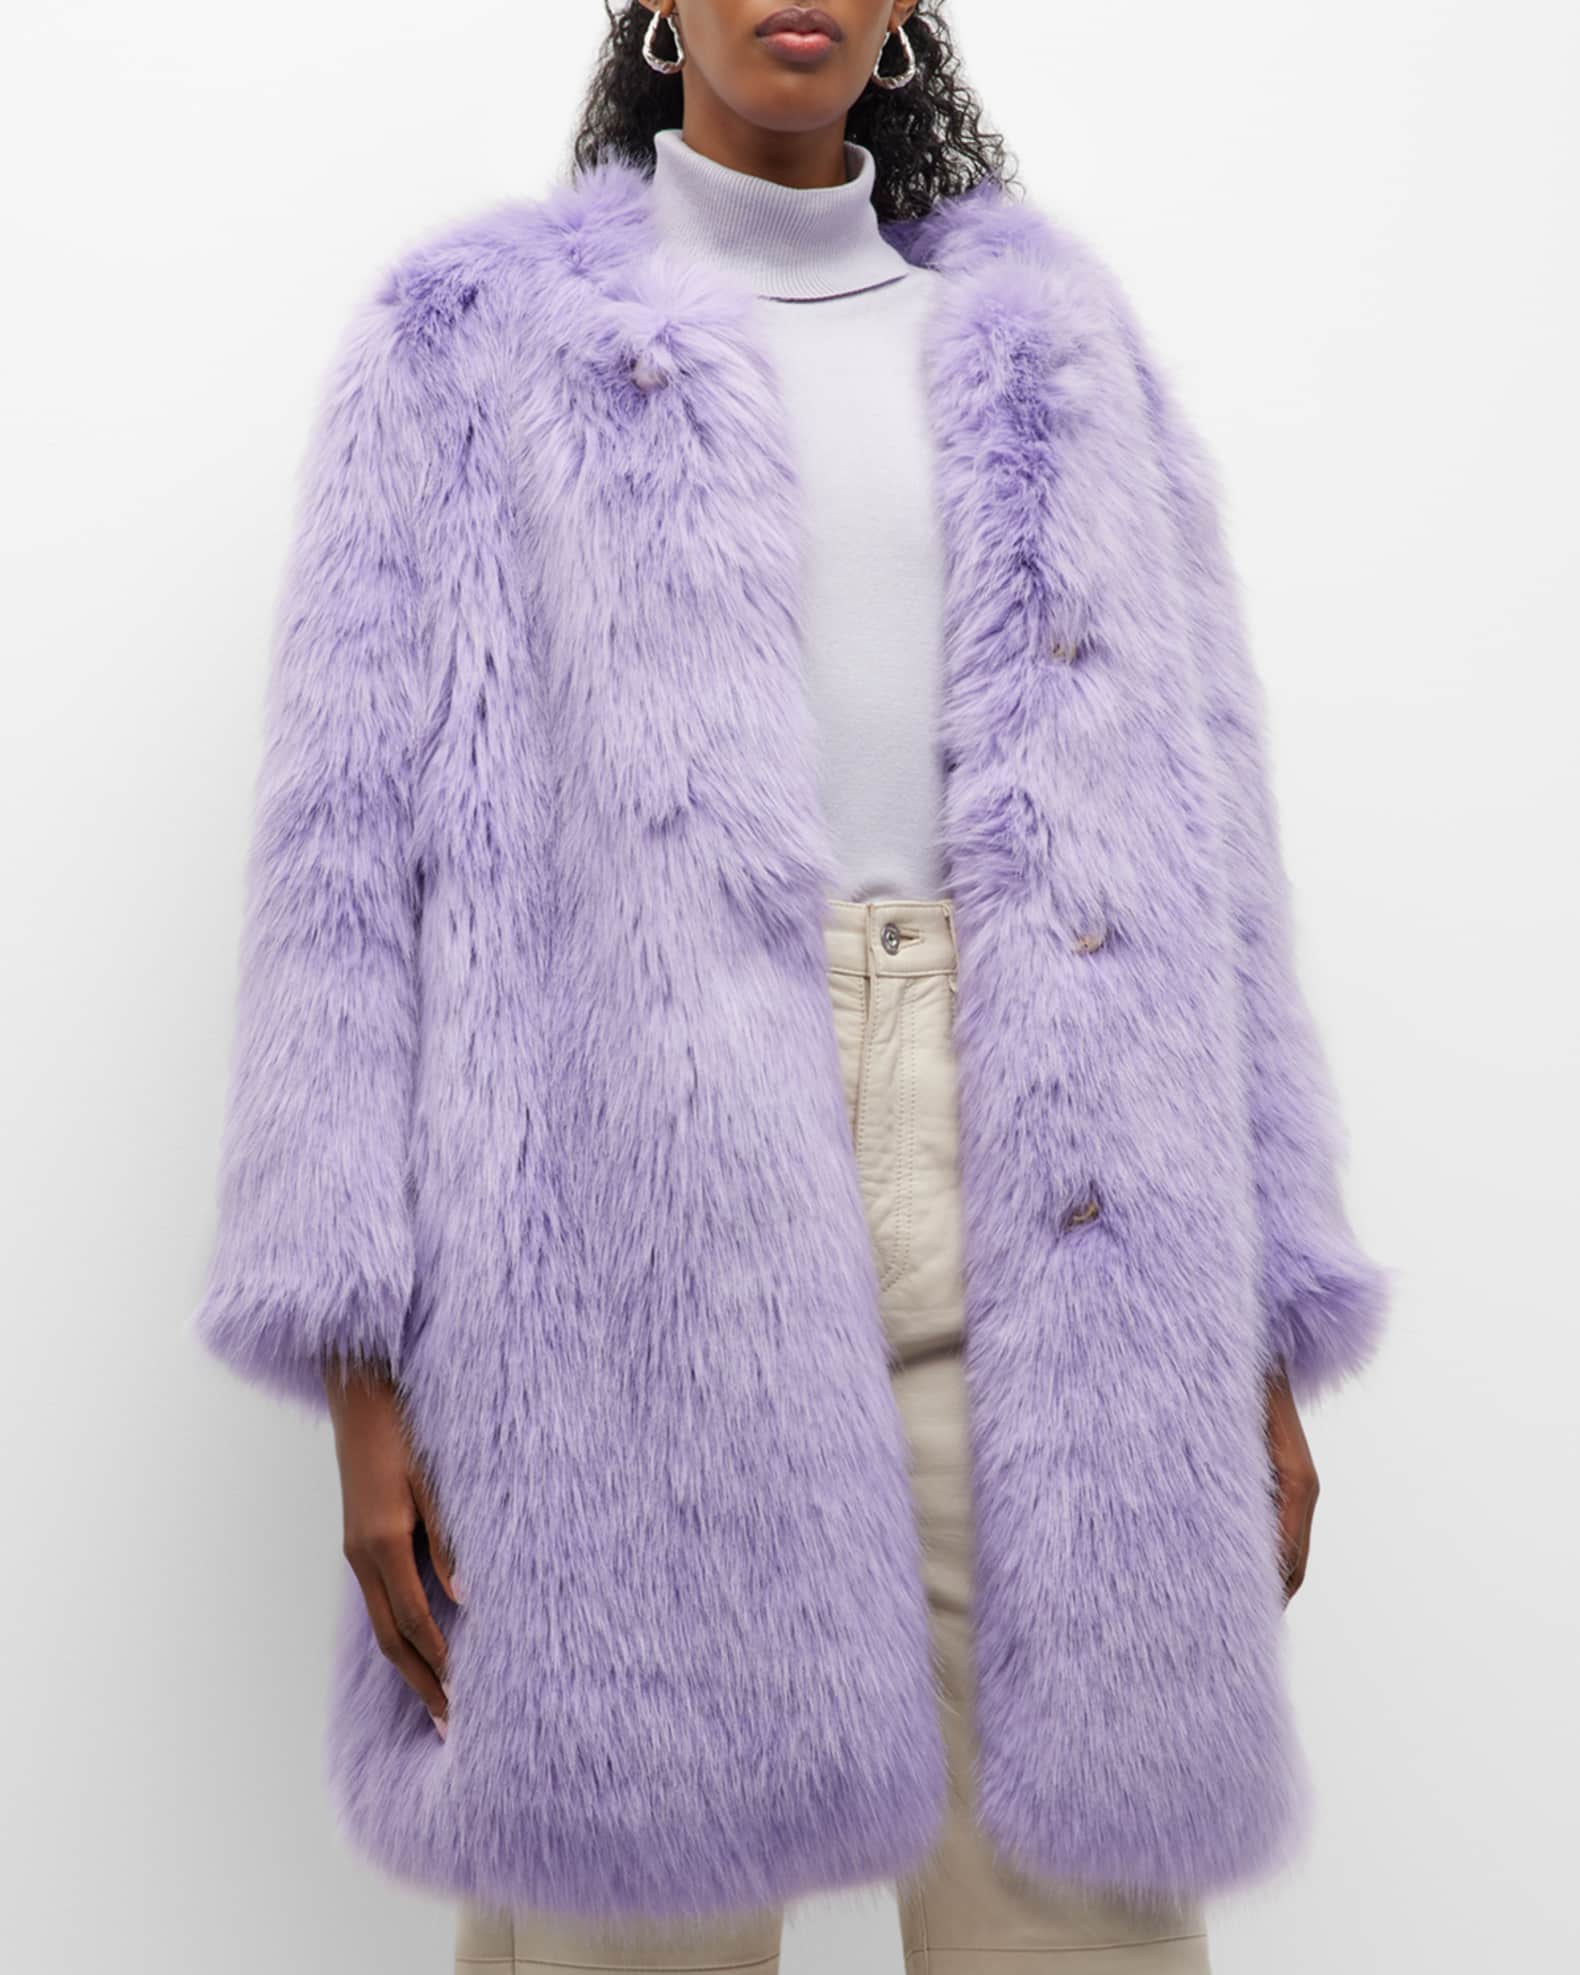 Finally got my hands on the viral @ZARA faux fur coat, love love